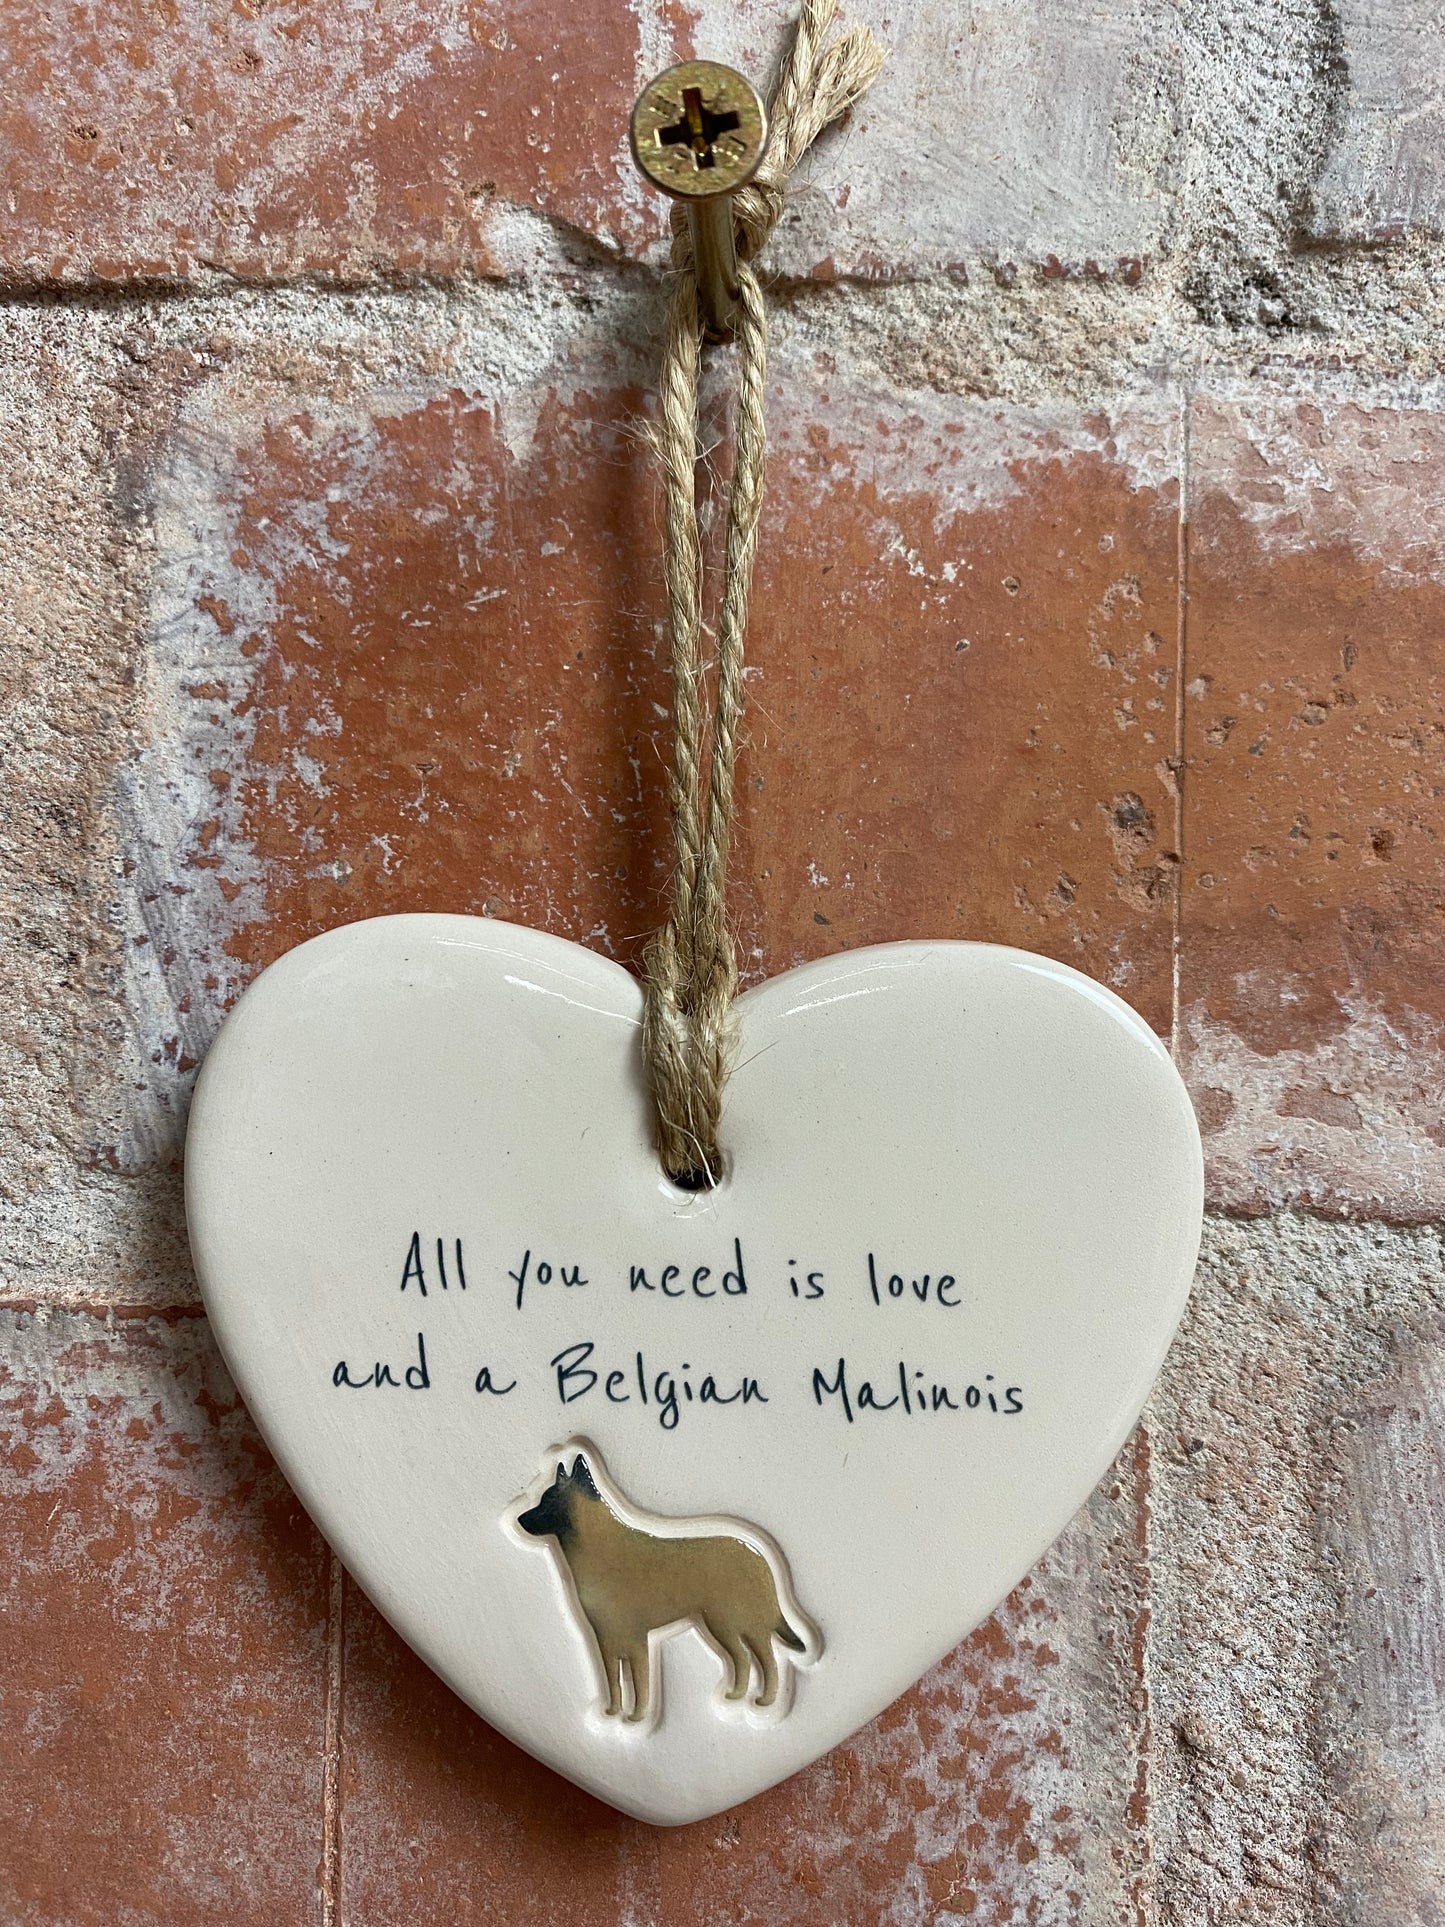 Belgian Malinois ceramic heart